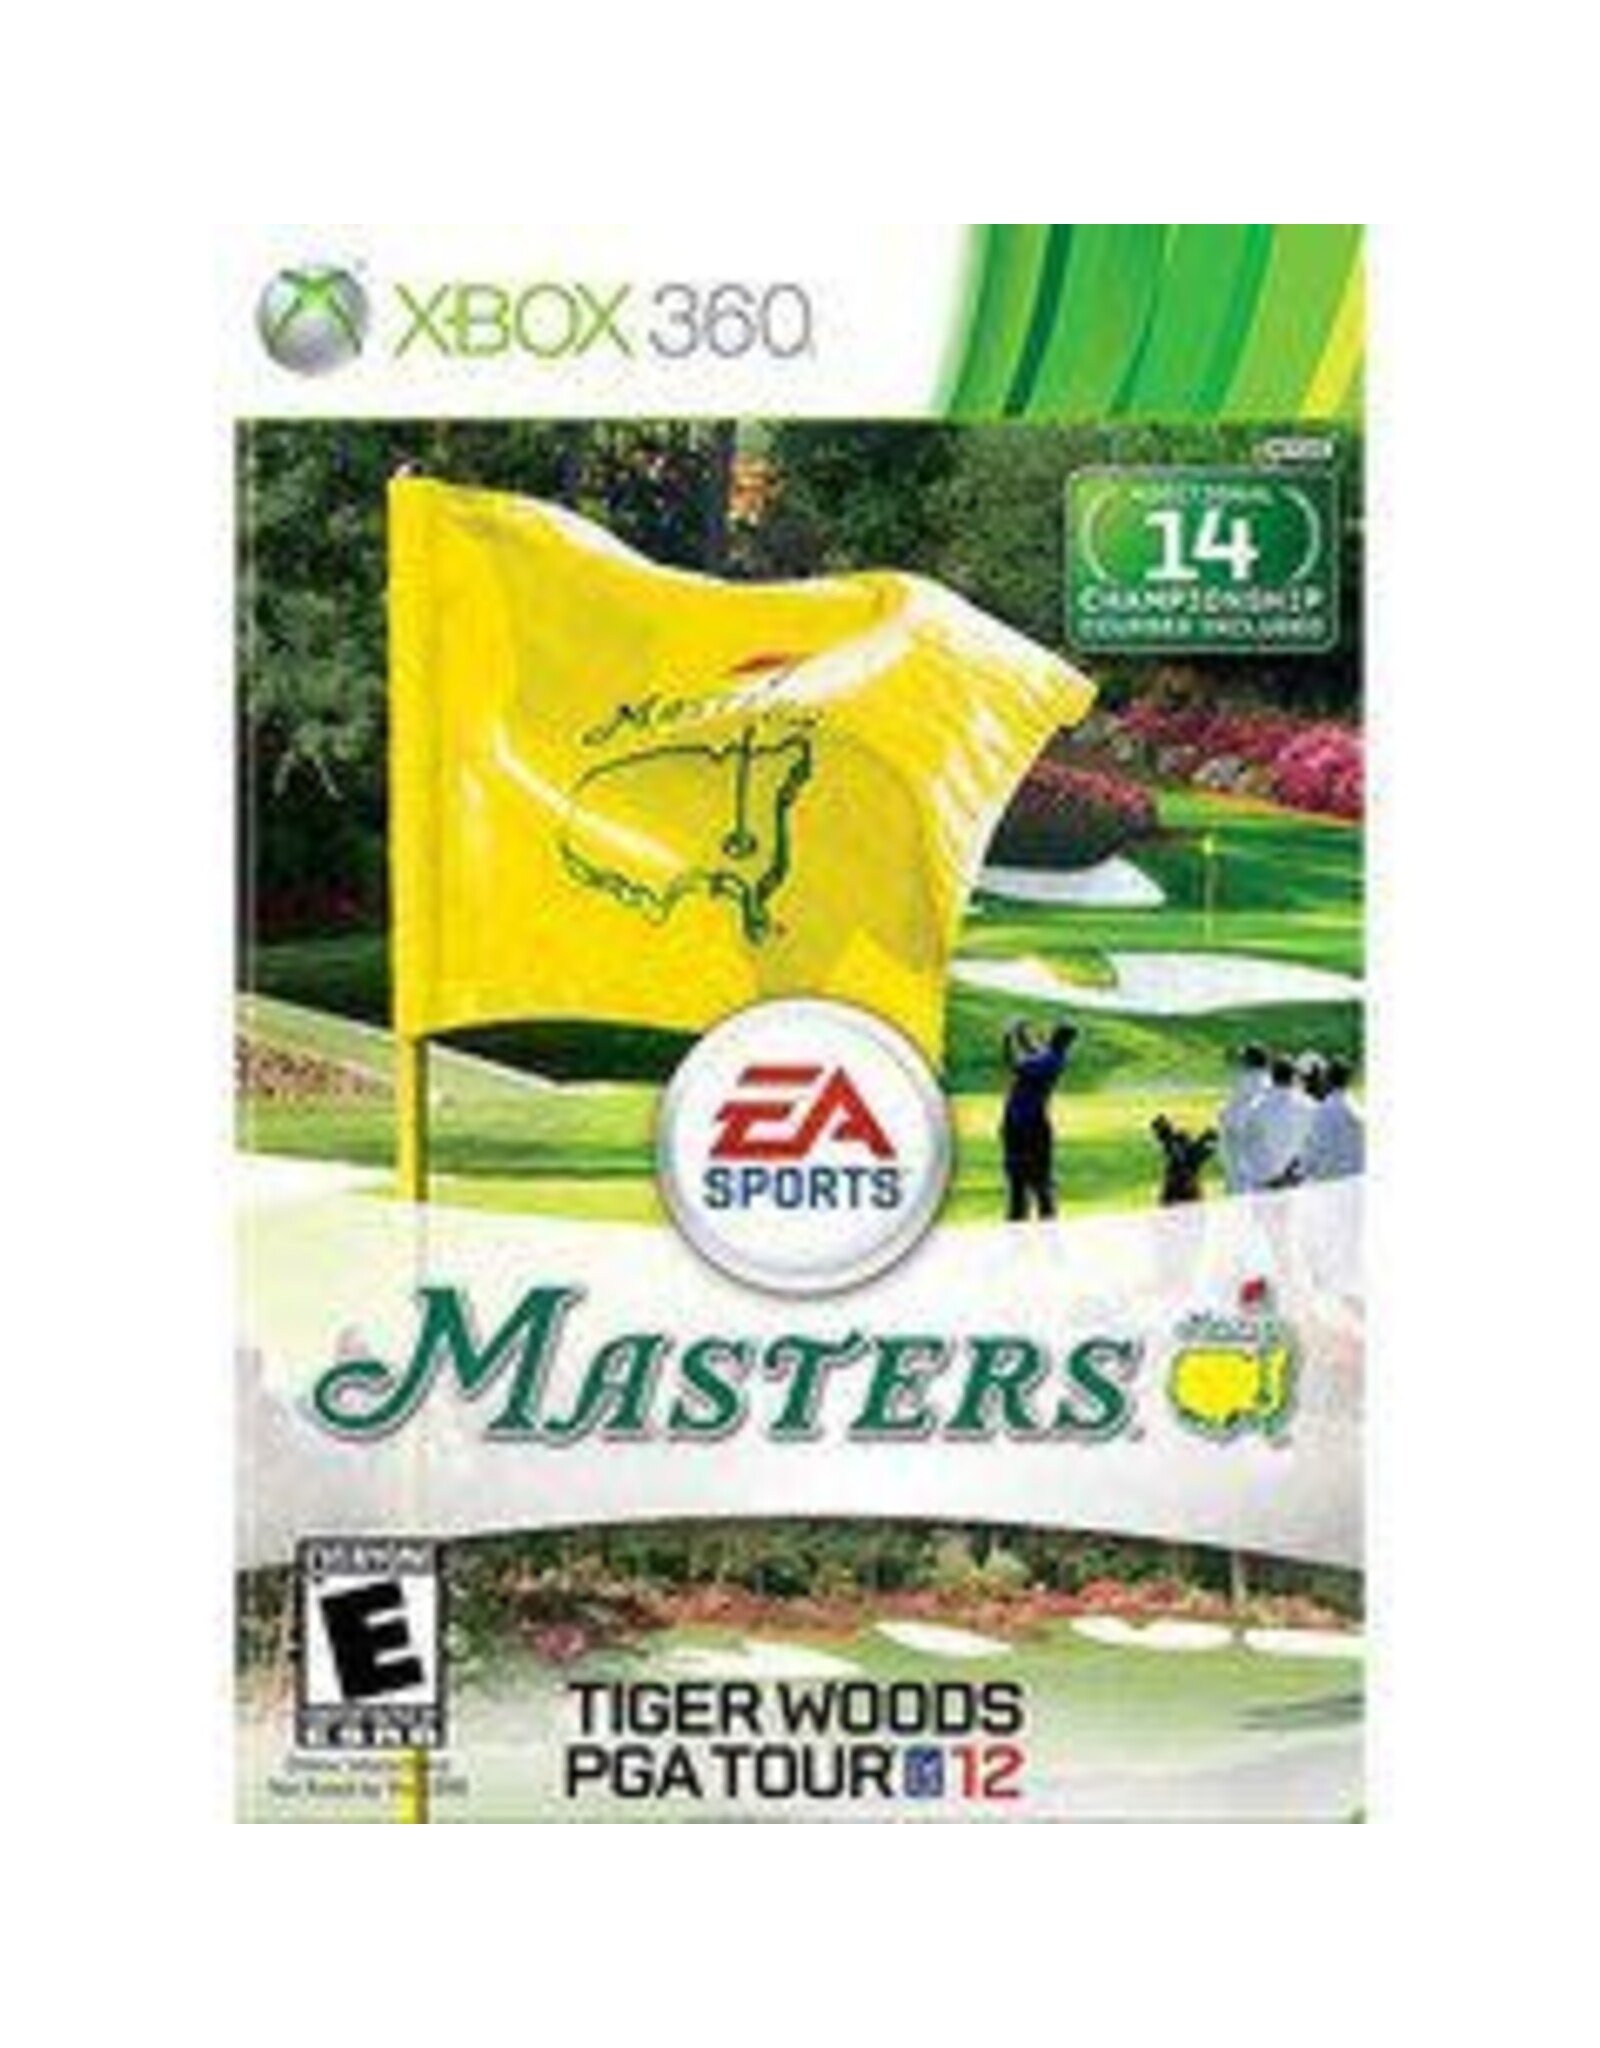 Xbox 360 Tiger Woods PGA Tour 12: The Masters (No Manual)